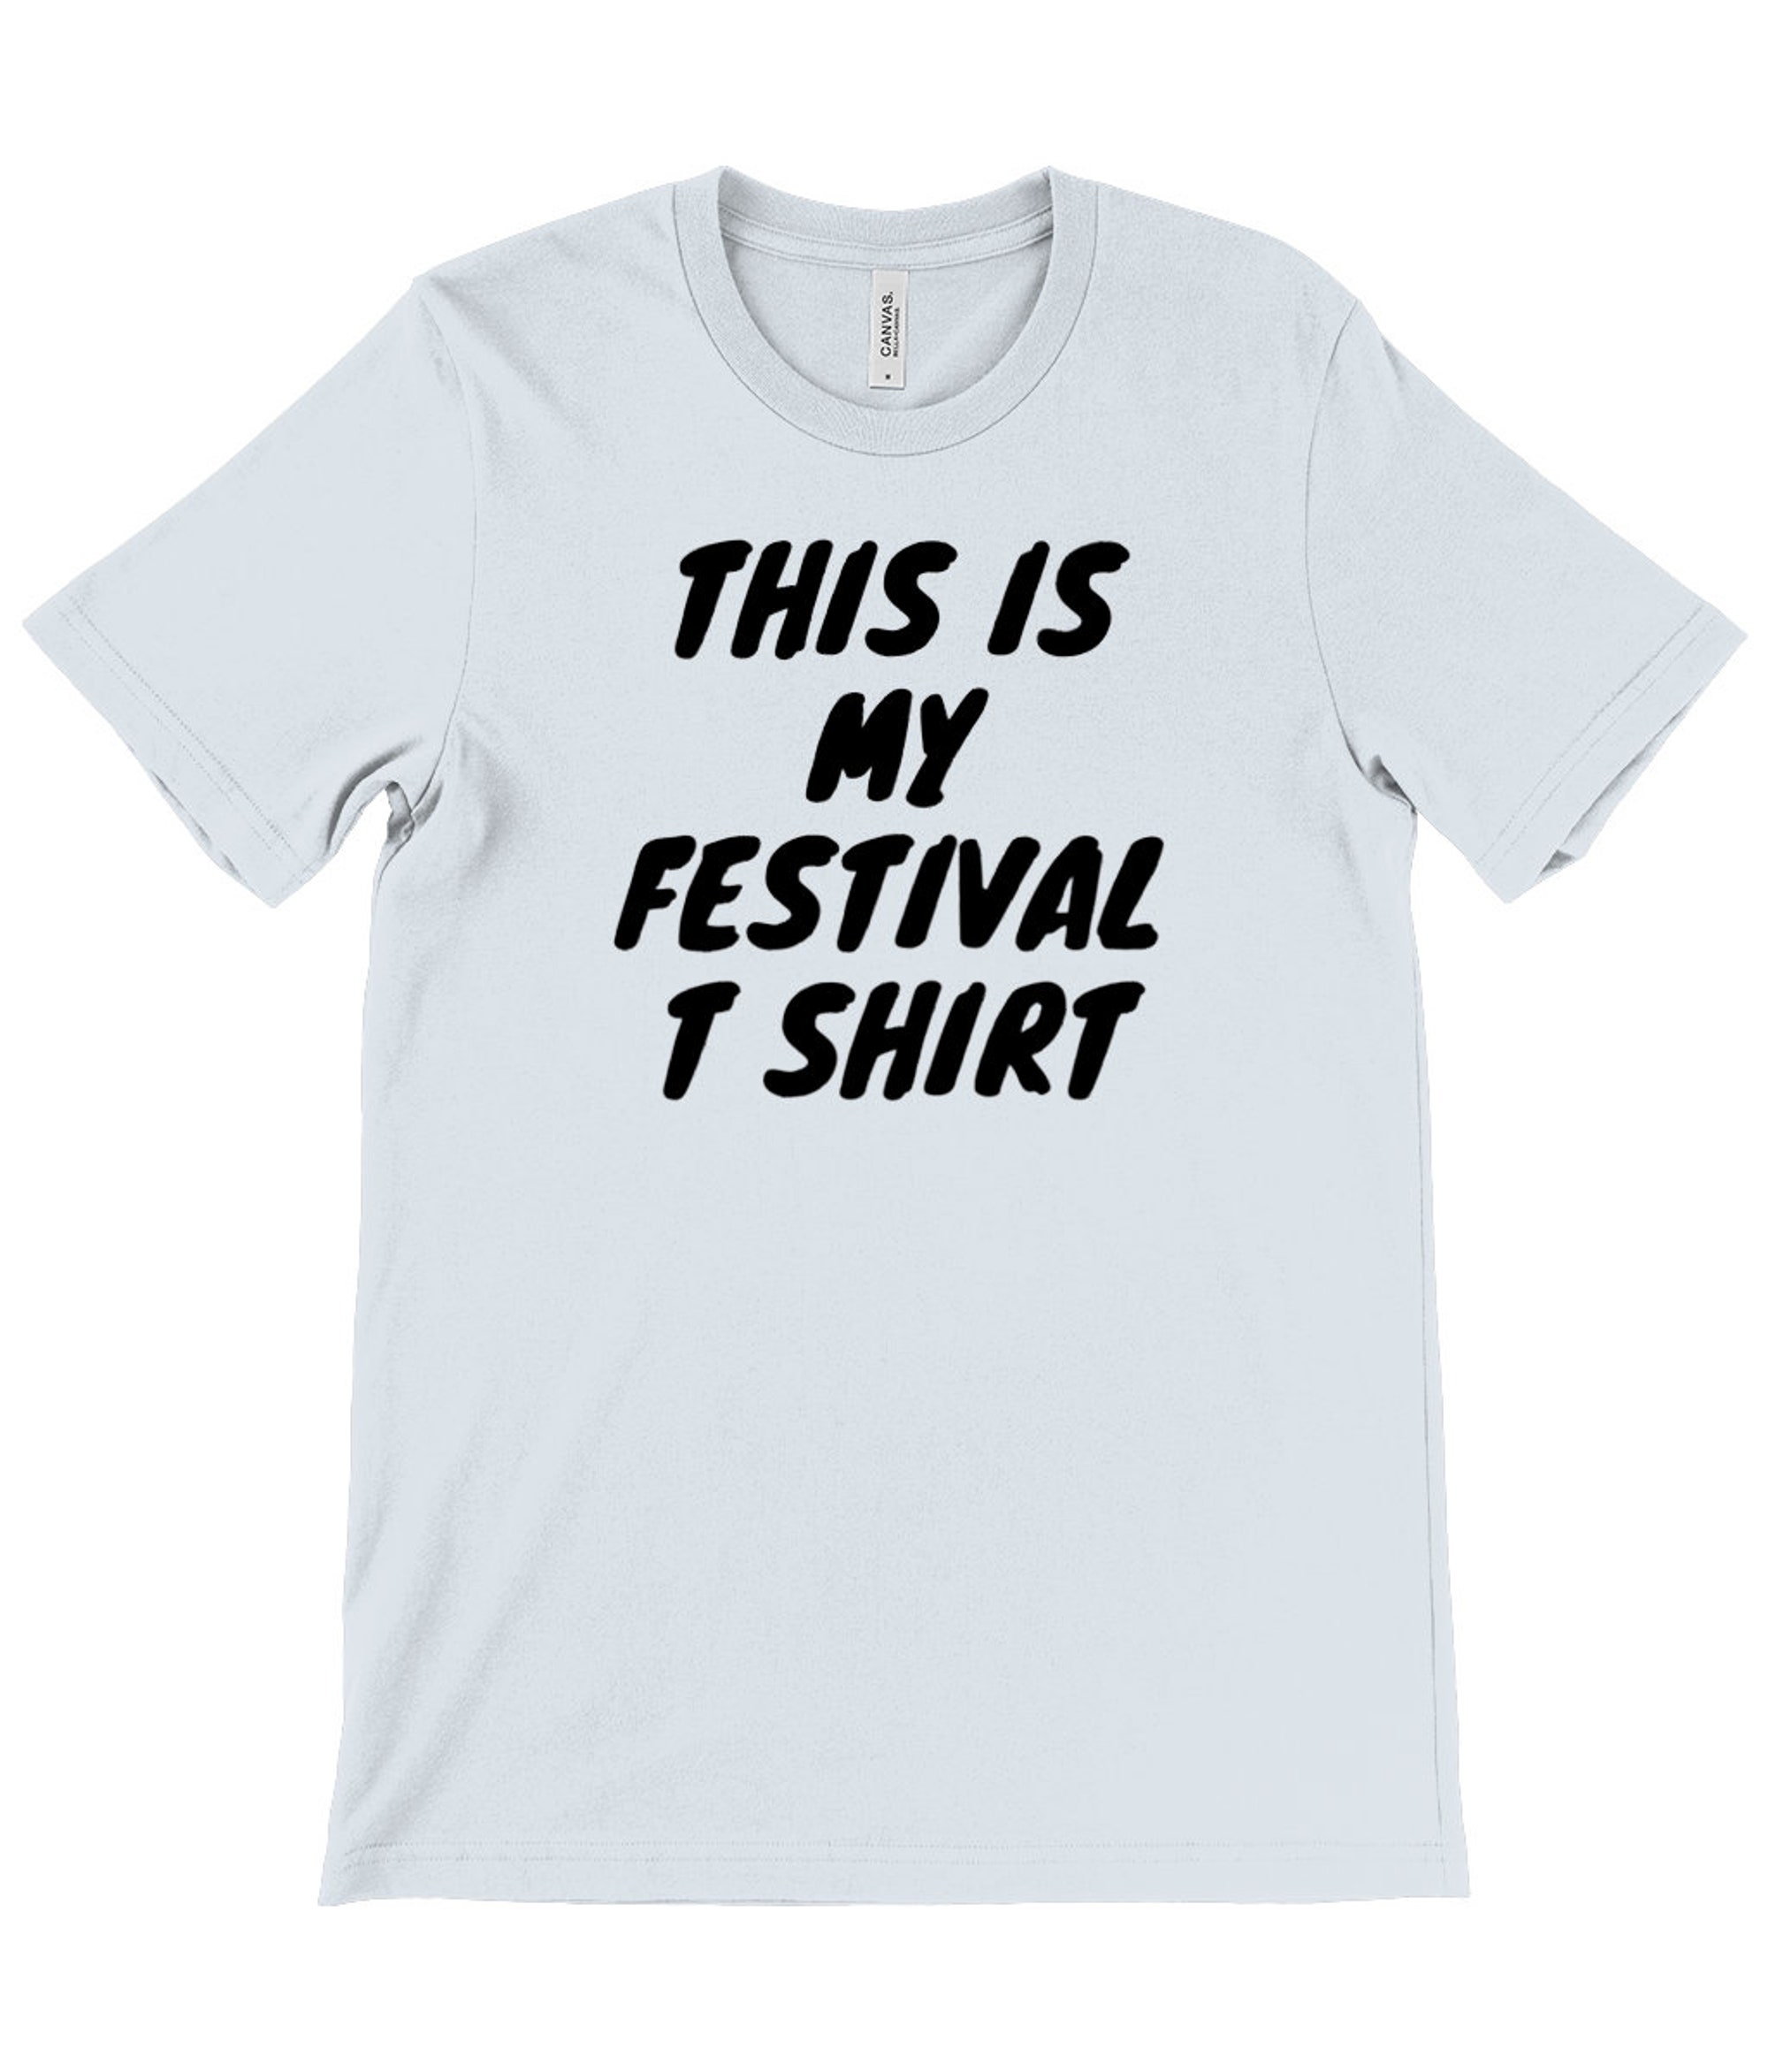 Discover Festival t shirt | music festival t shirt | Funny t shirt